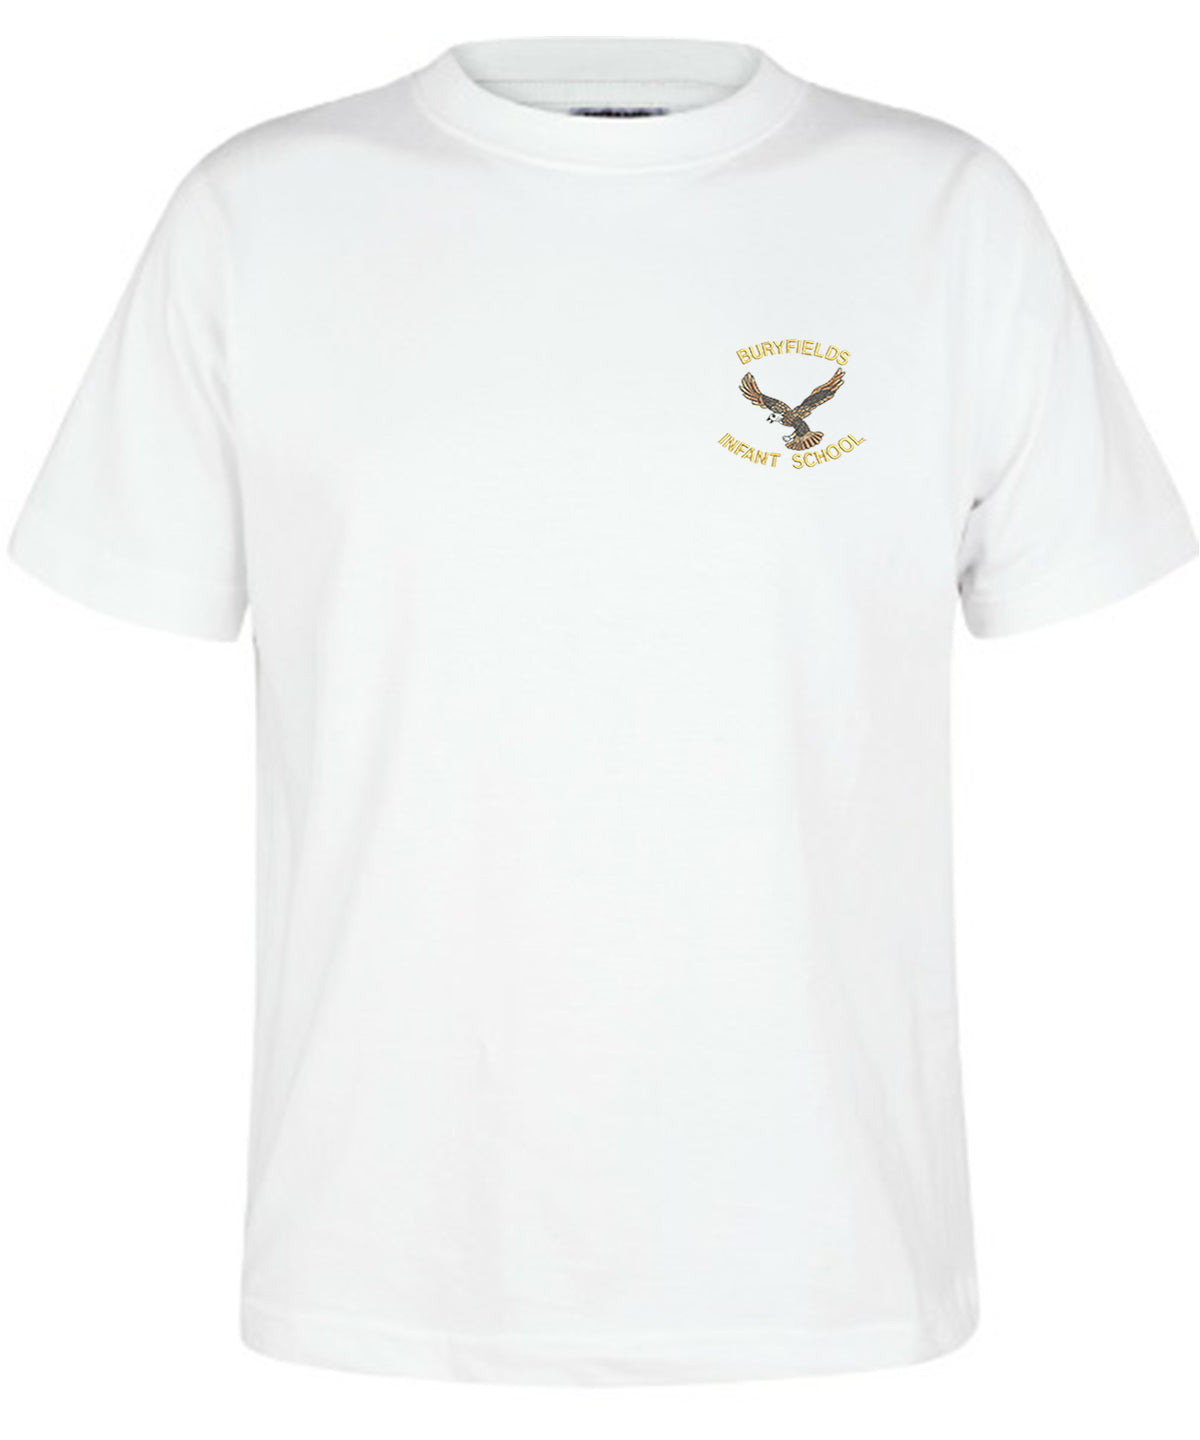 Buryfields Infant School - Cotton Unisex T-Shirt